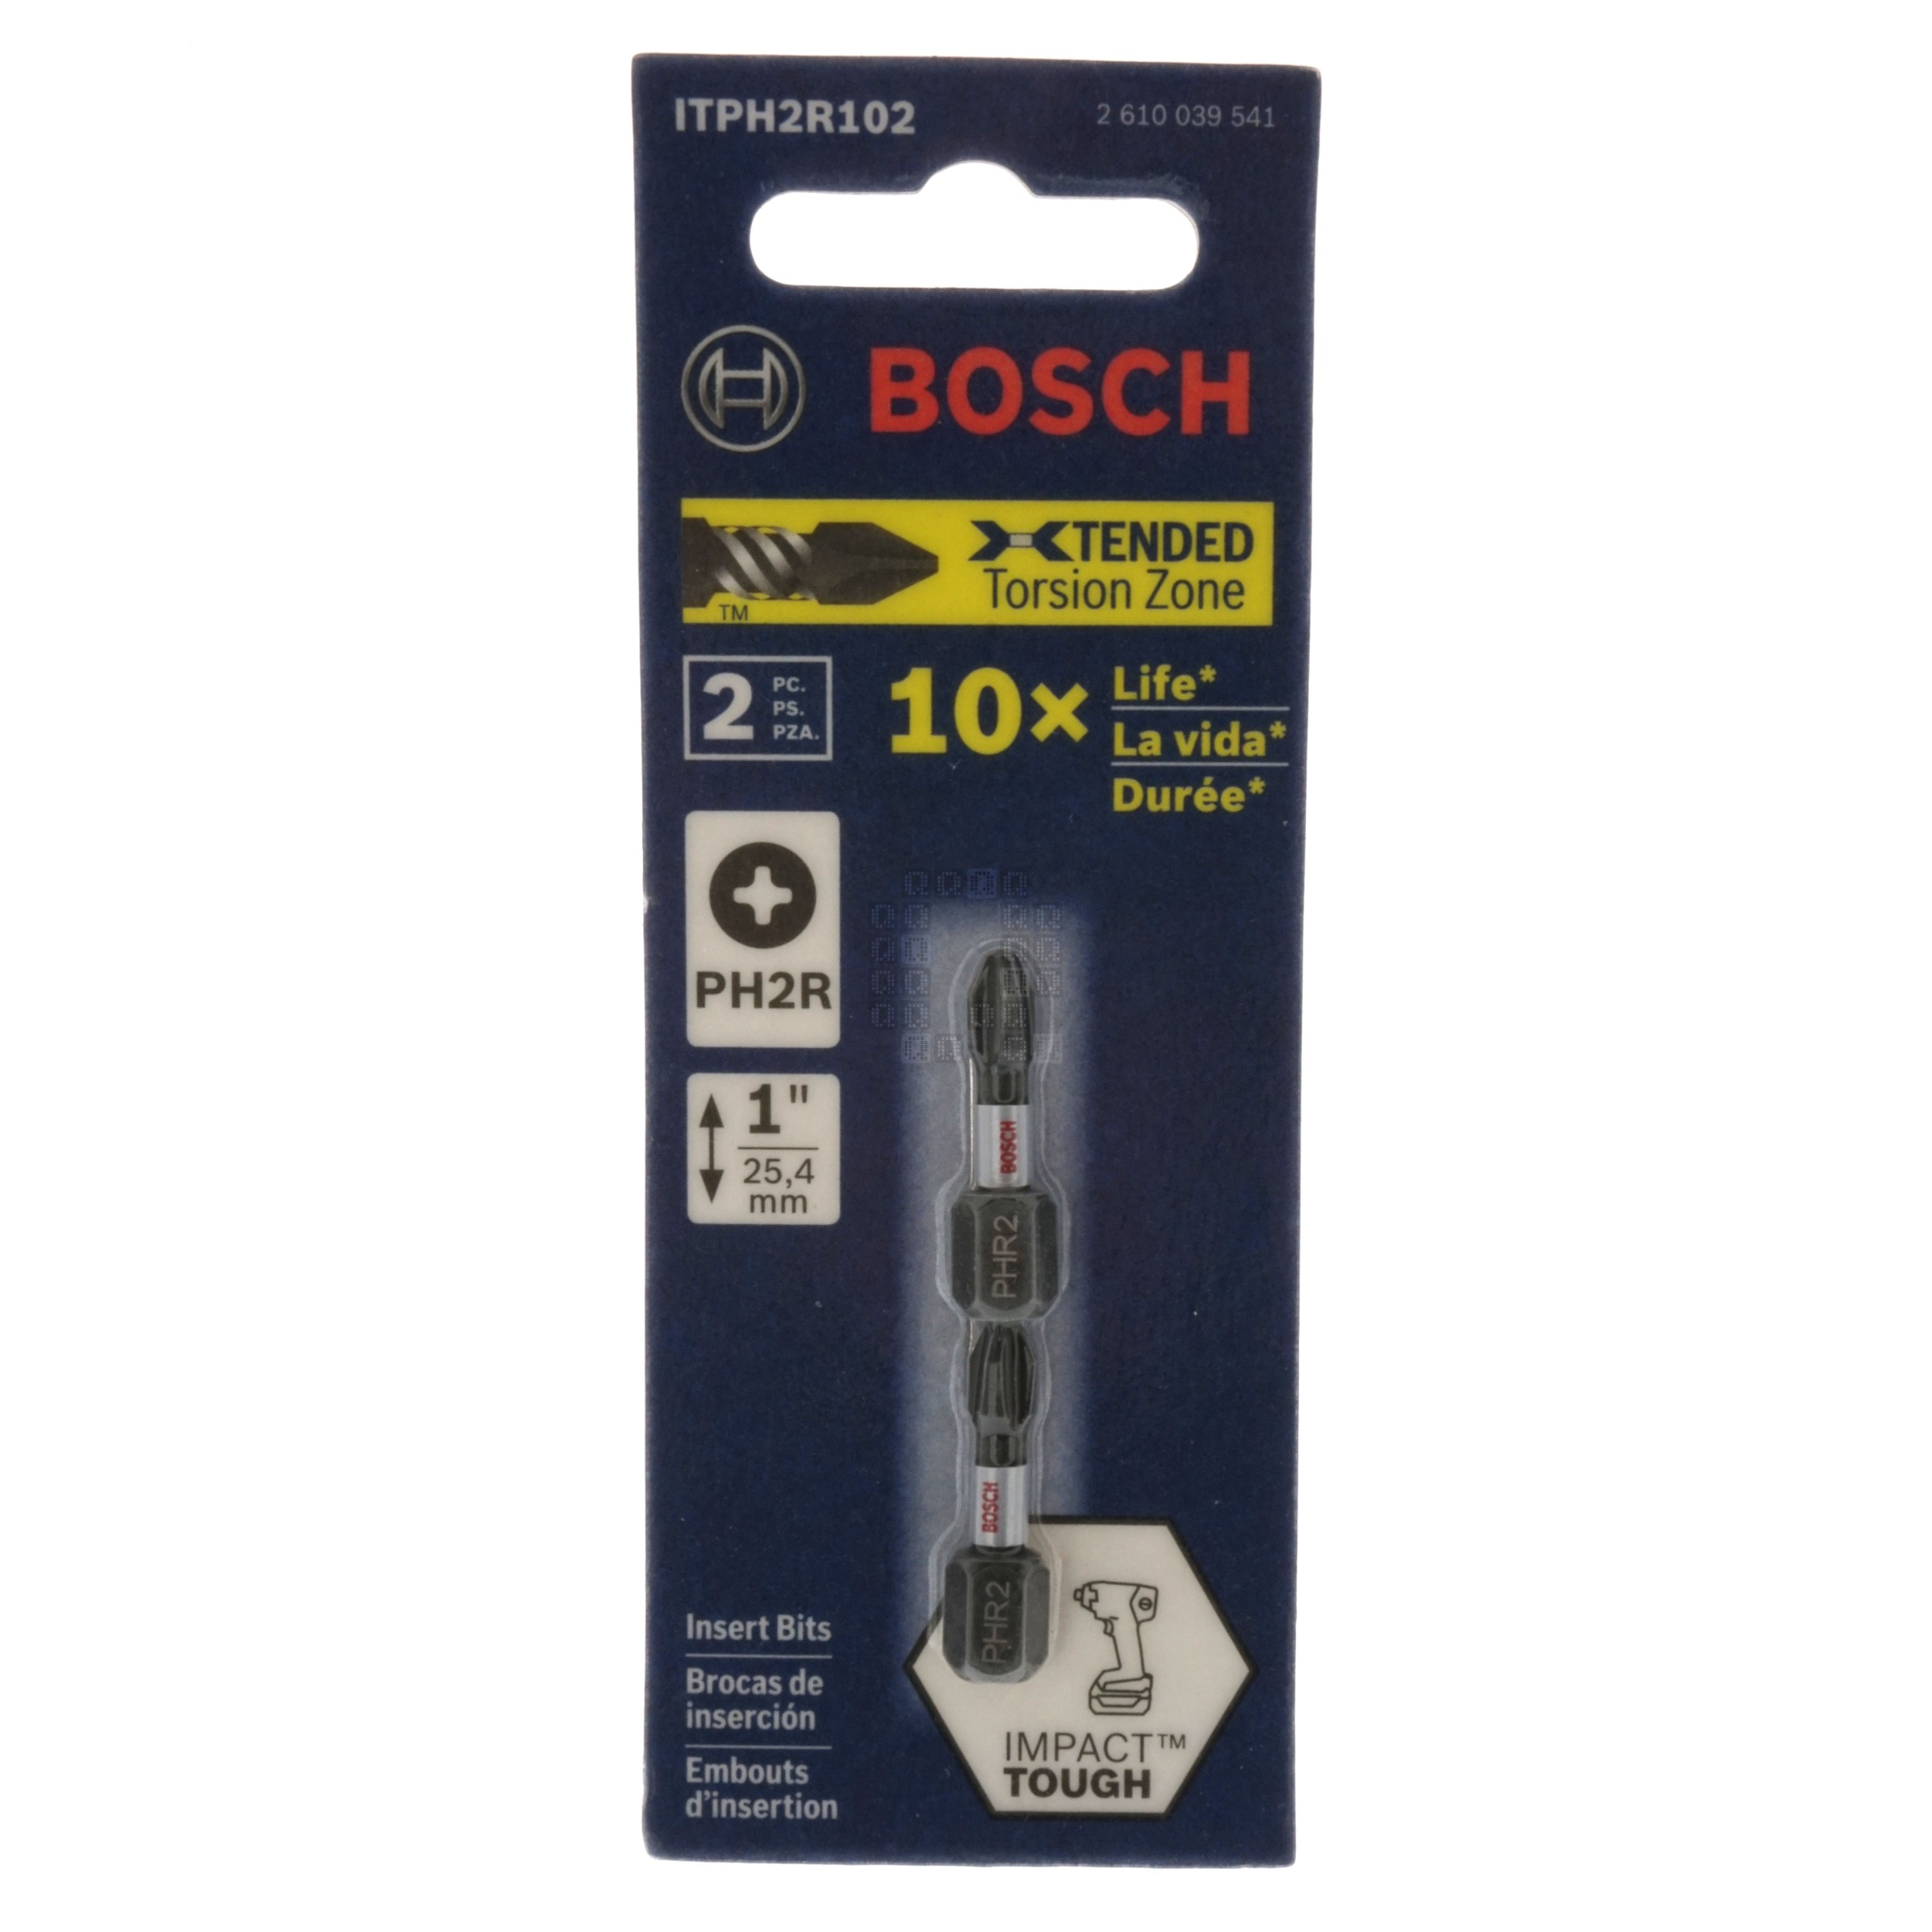 Bosch ITPH2R102 Impact Tough PH2R #2 Phillips Insert Bits, 1" Length, 2-Pack